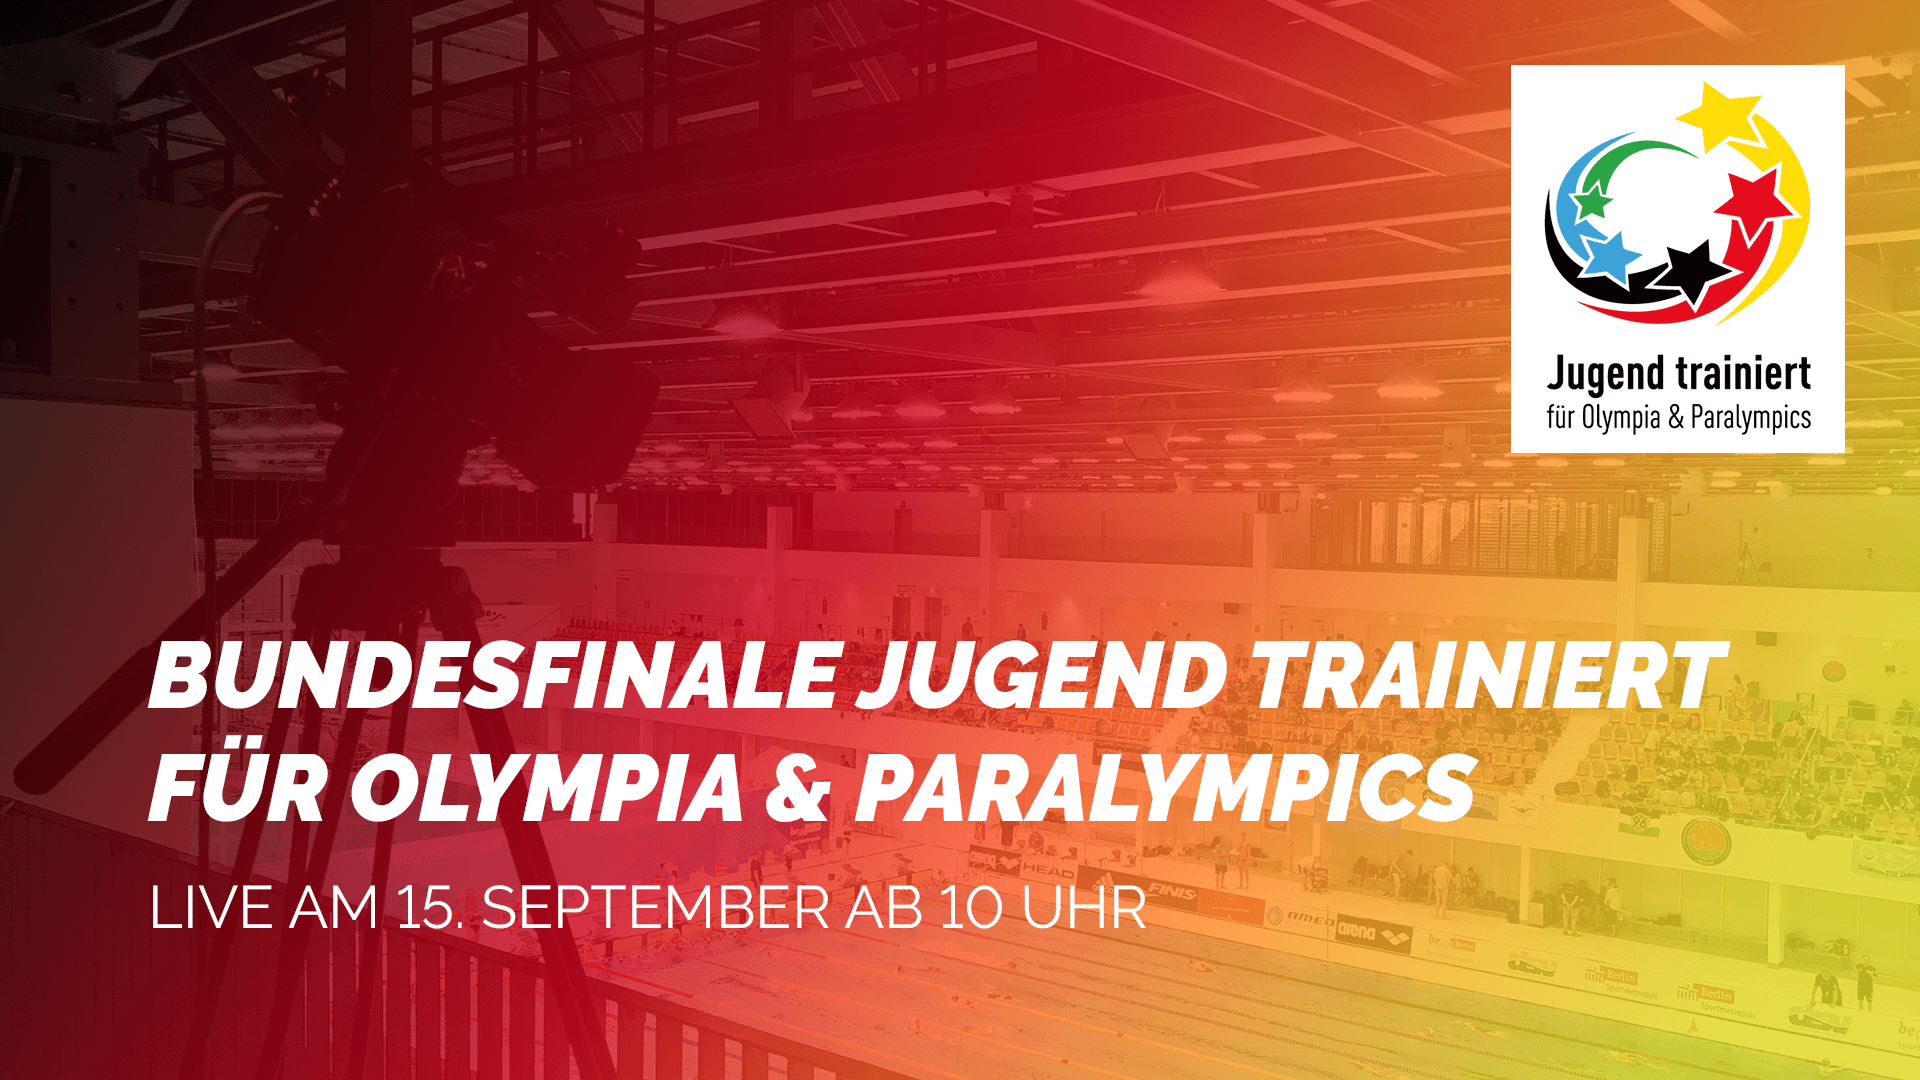 Bundesfinale Jugend trainiert für Olympia & Paralympics 2022 Logo